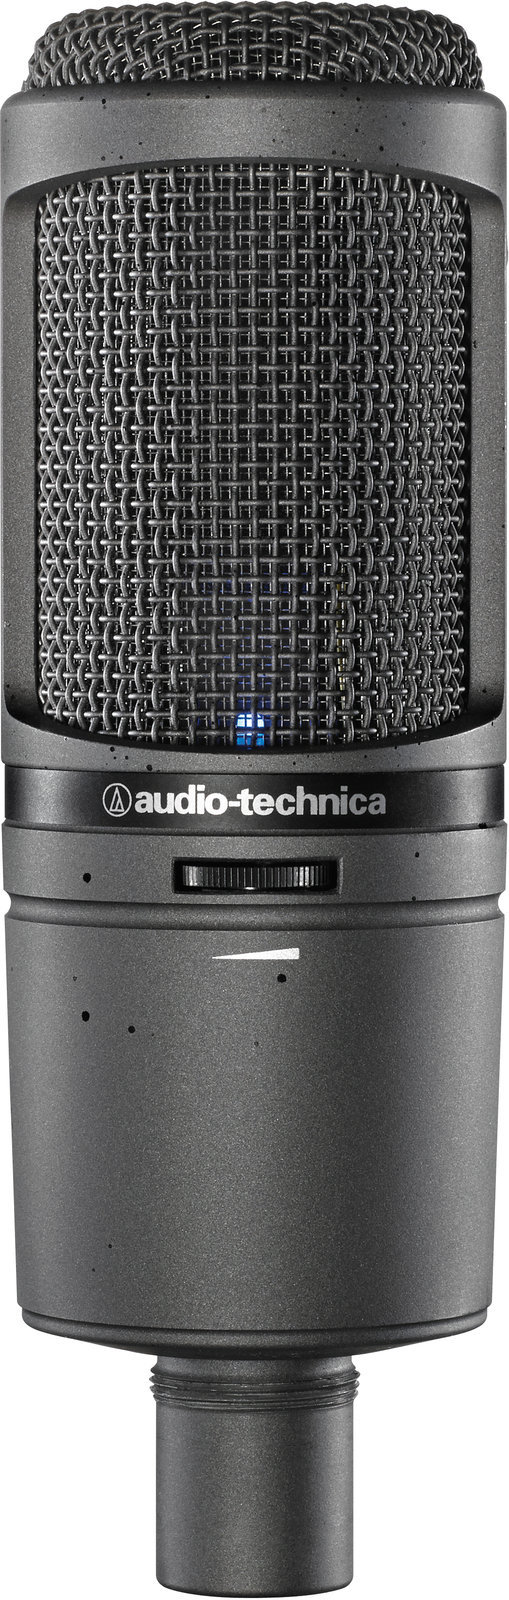 USB mikrofon Audio-Technica AT2020USBi